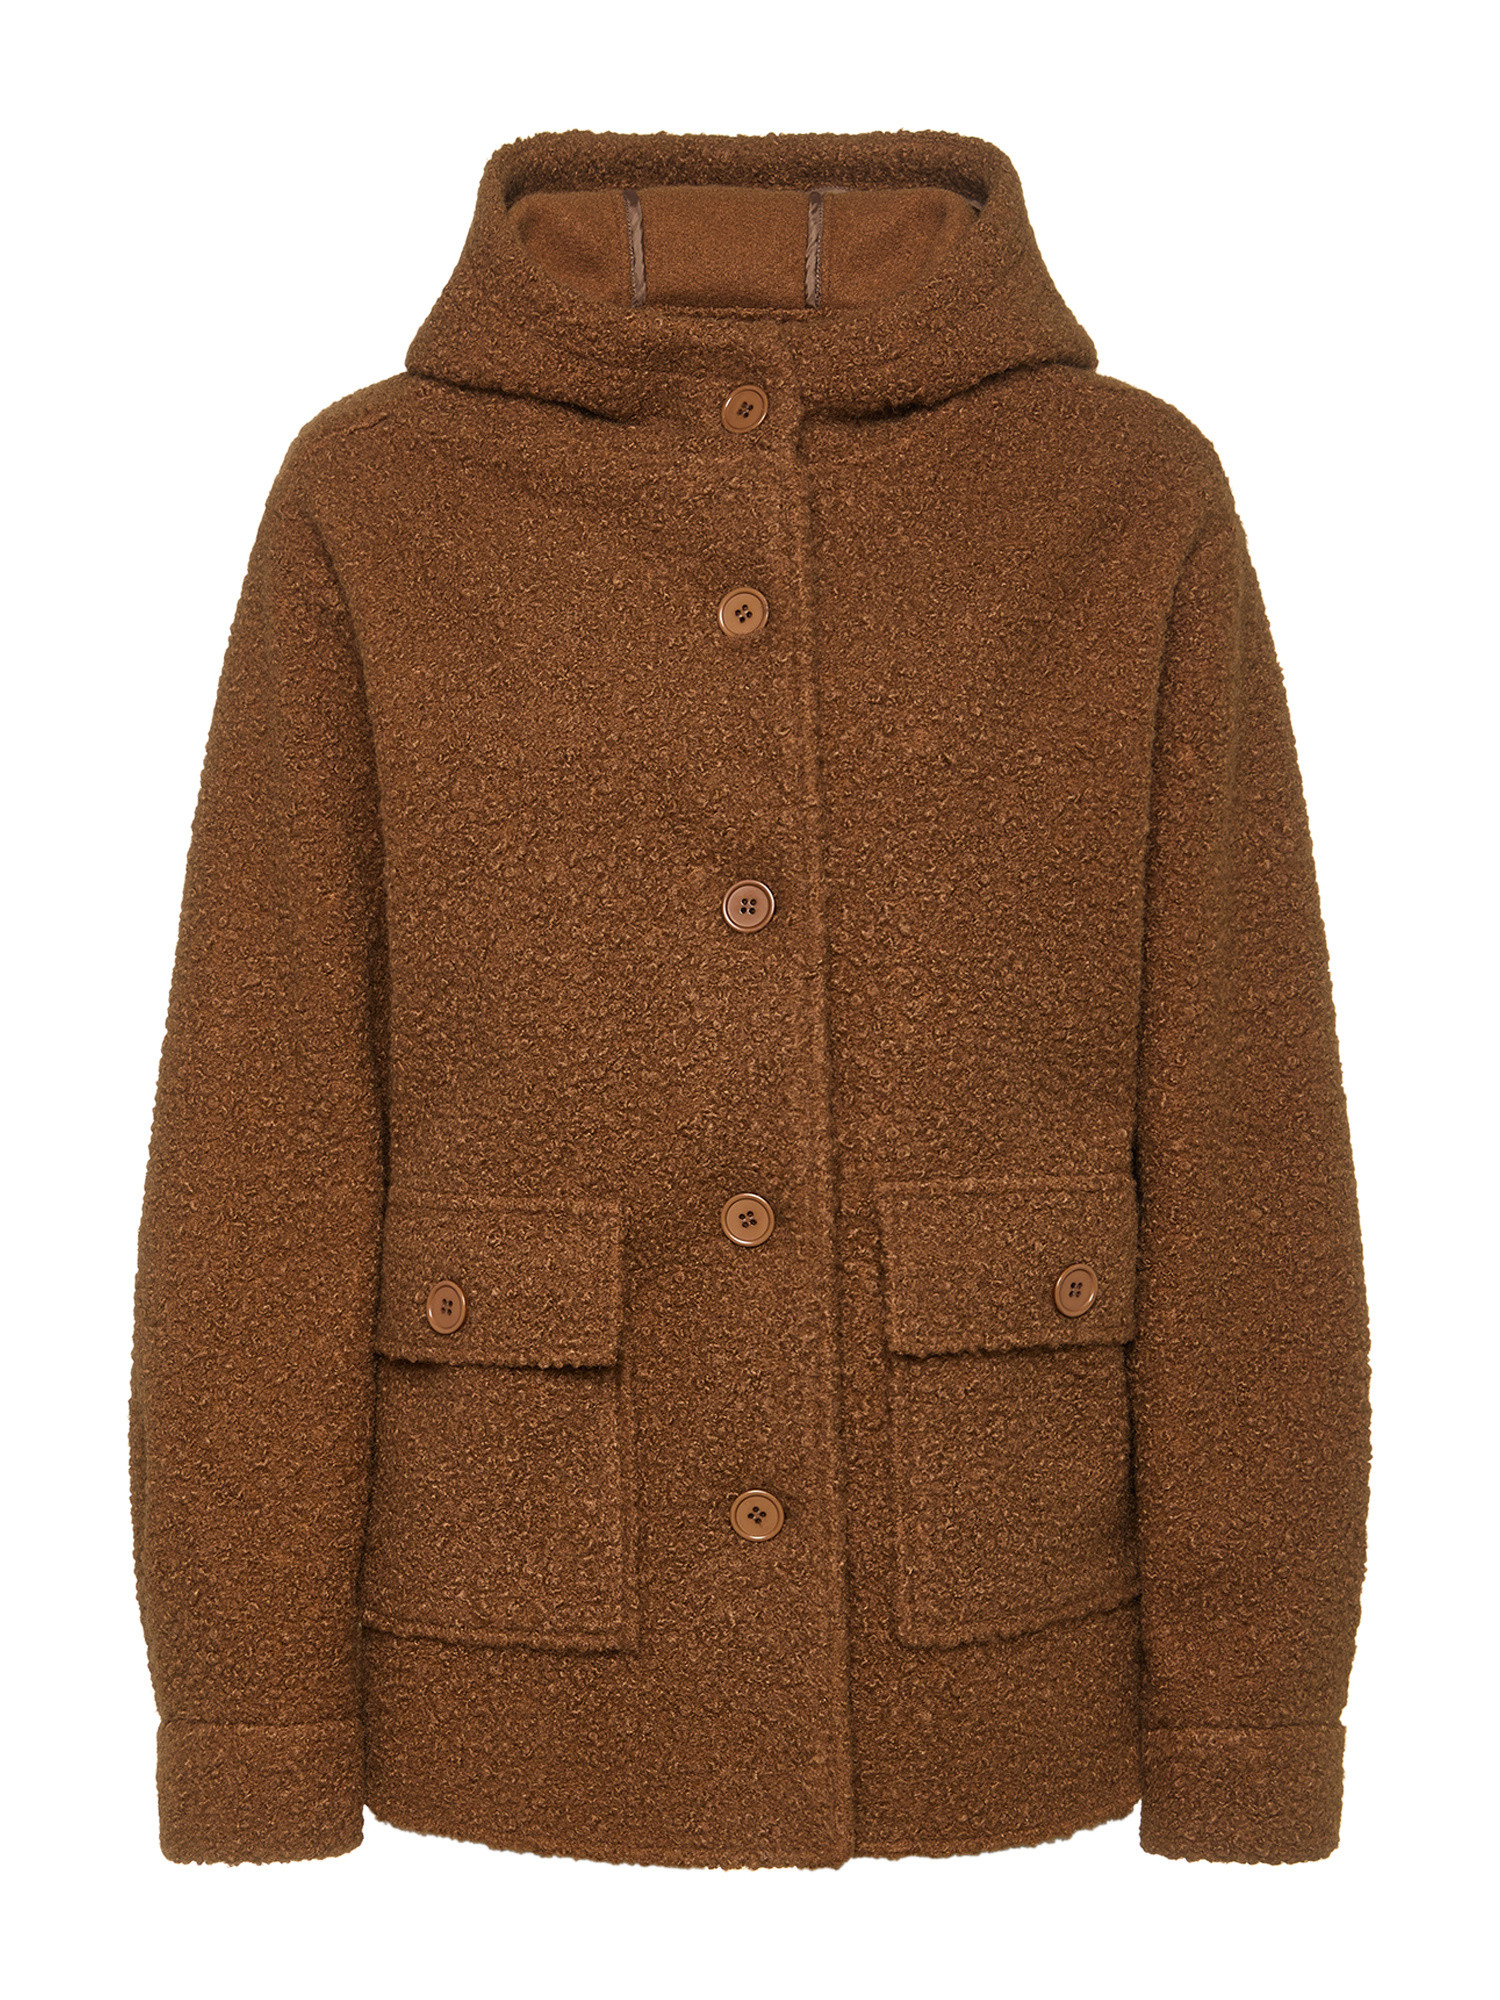 Koan - Short jacket with hood, Camel, large image number 0